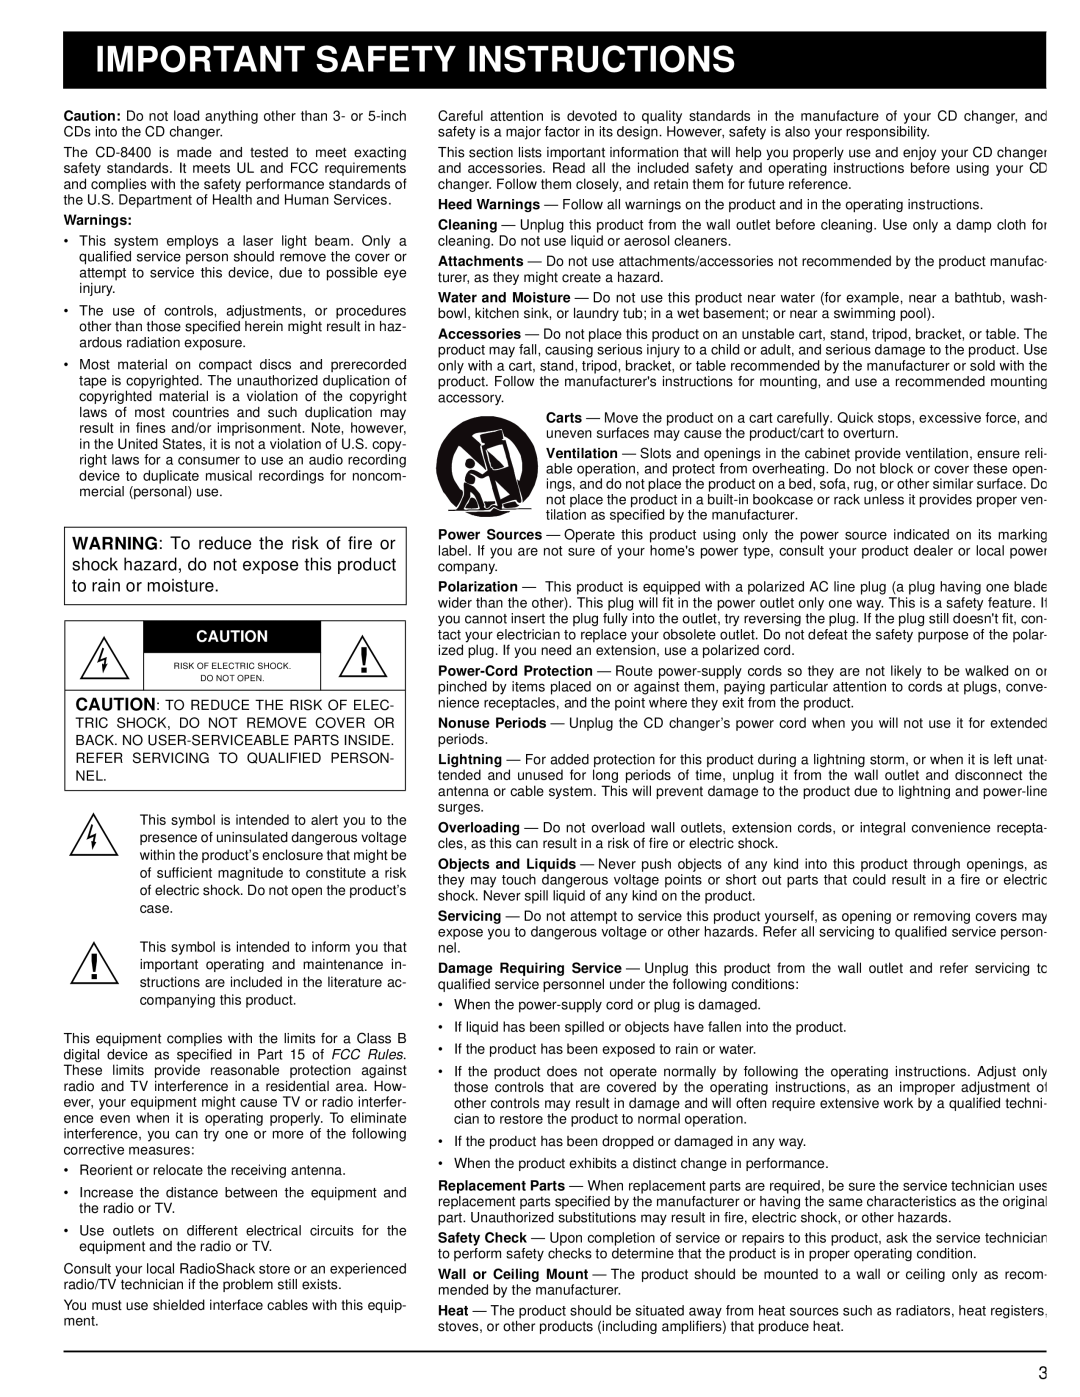 Radio Shack CD-8400 owner manual Important Safety Instructions, Warnings 